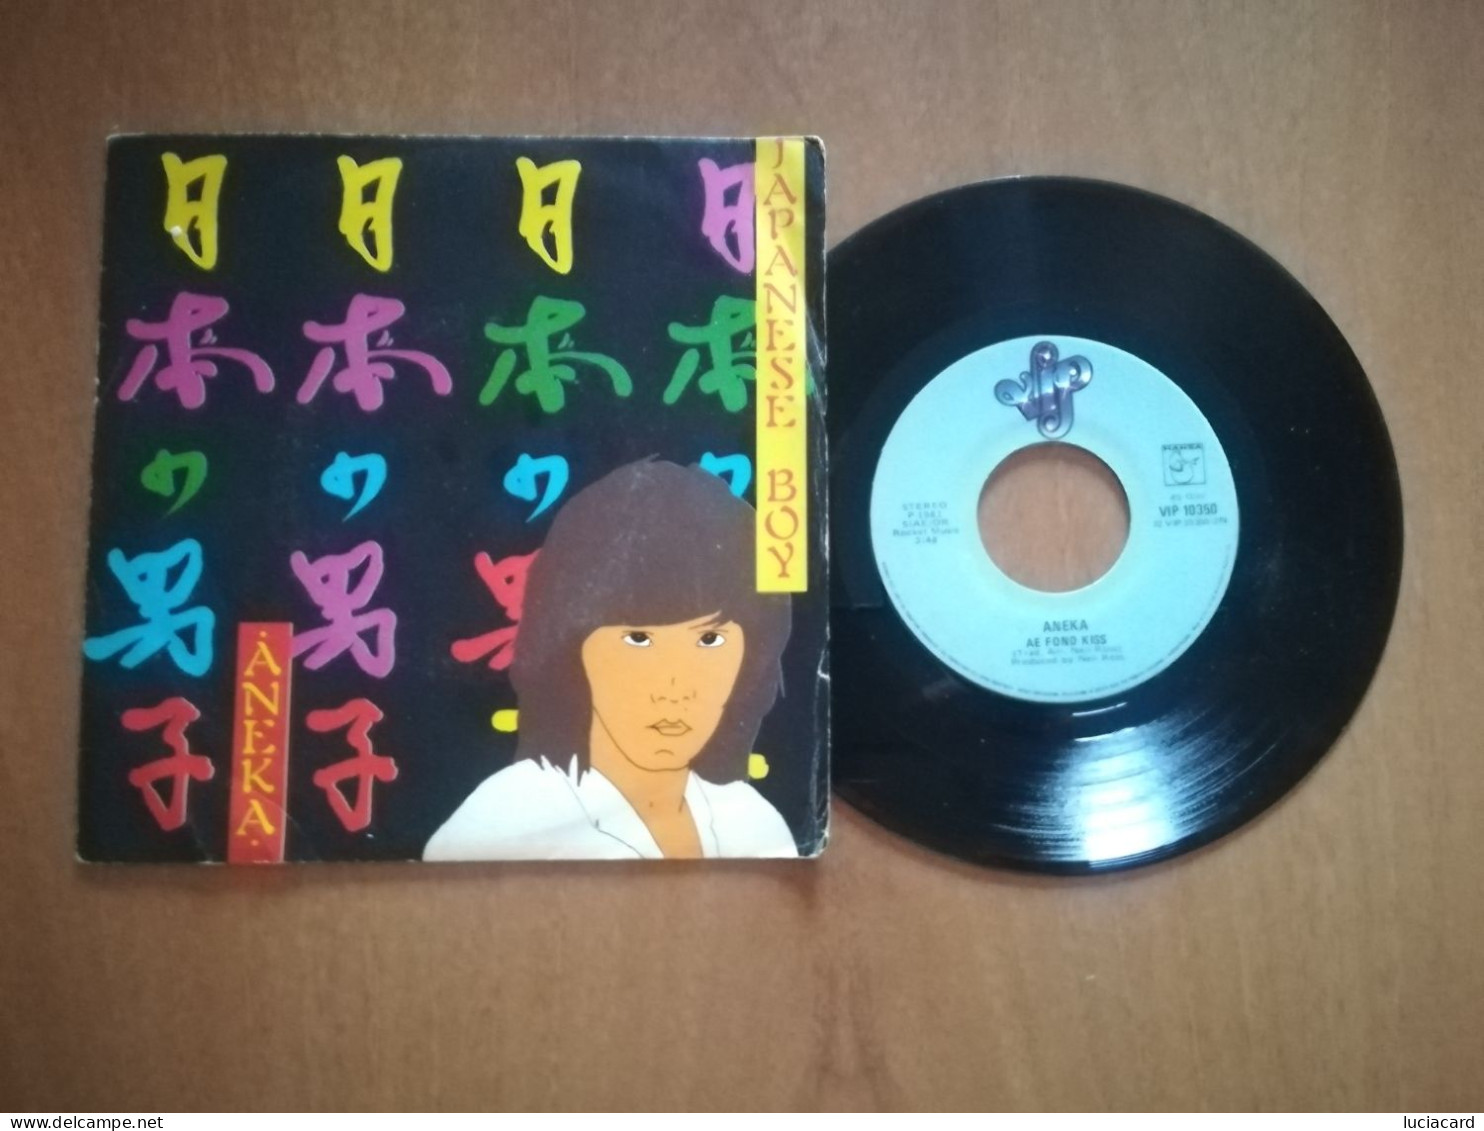 ANEKA -JAPANESE BOY -DISCO VINILE 45 GIRI 1981 VINTAGE - Punk